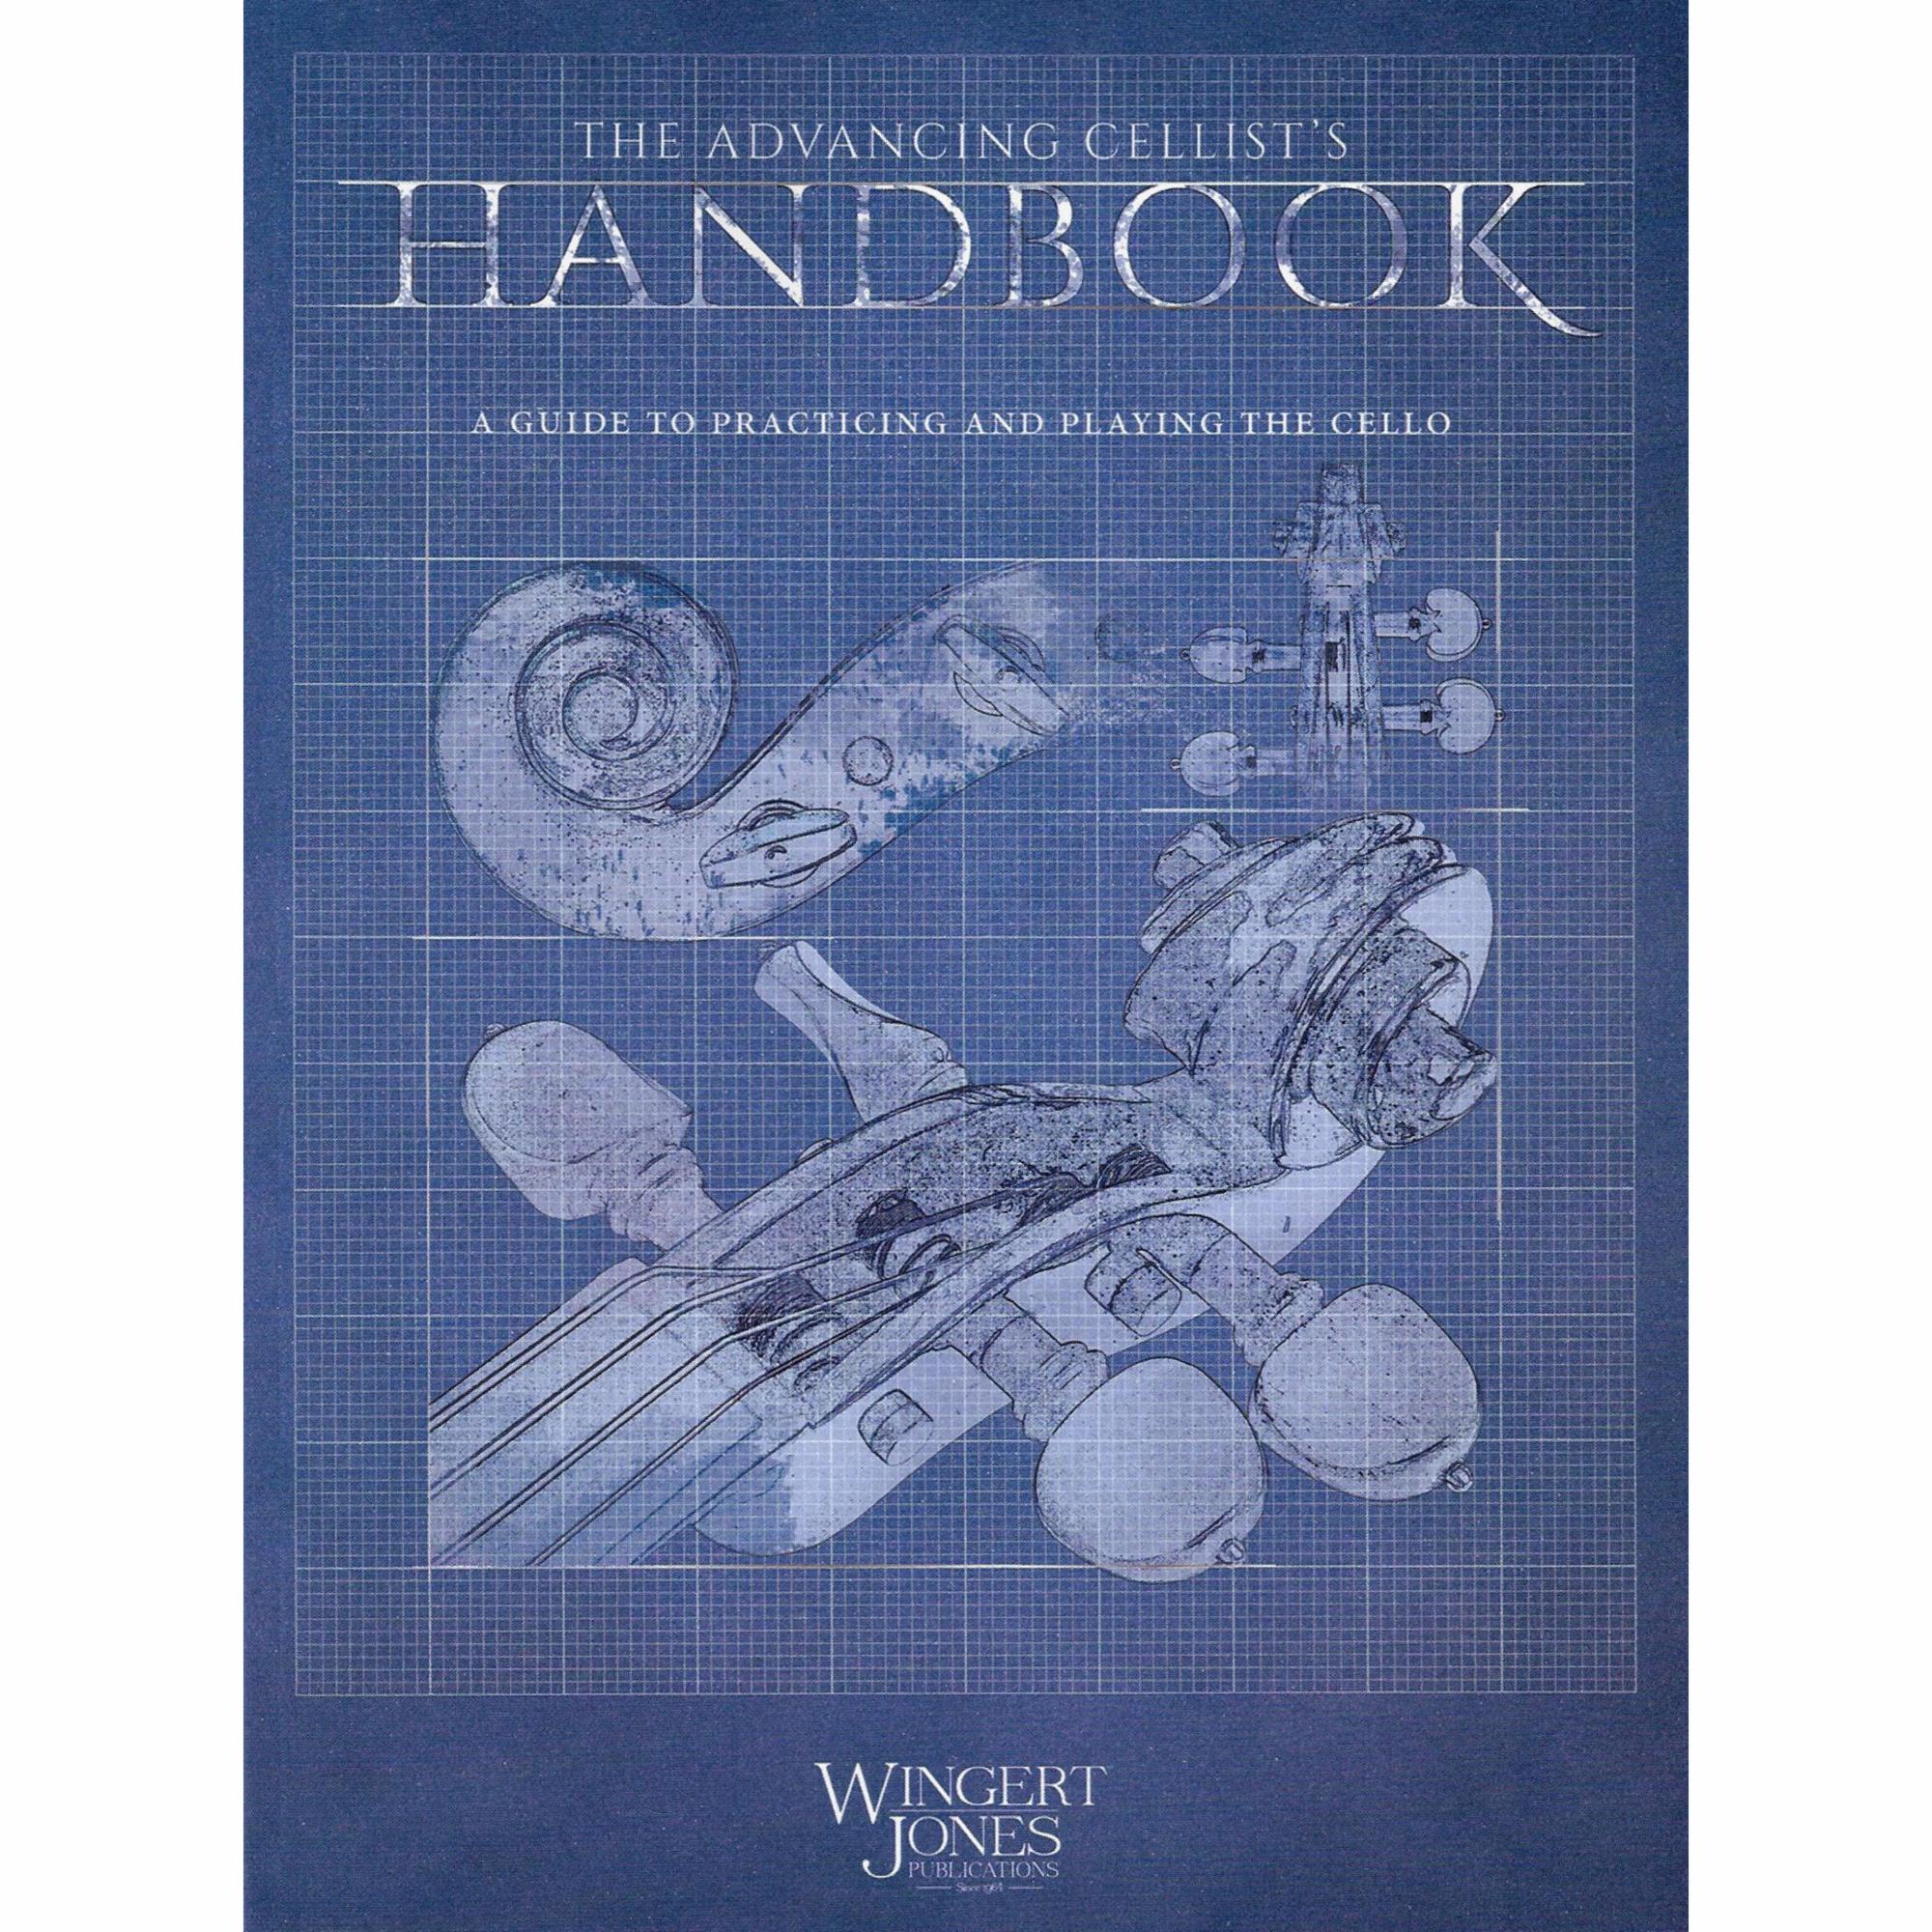 The Advancing Cellist's Handbook